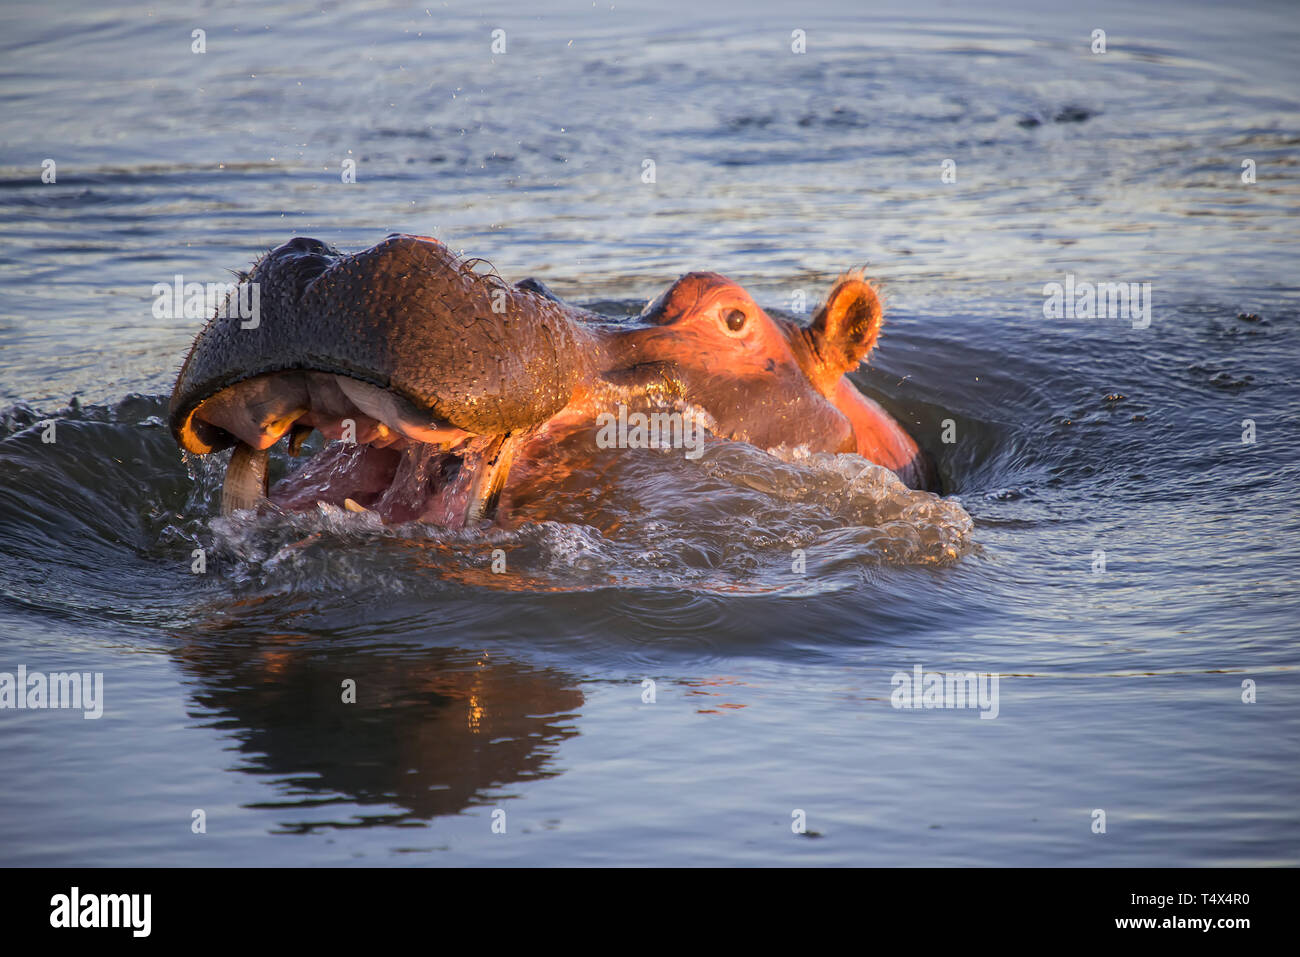 Hippopotamus (Hippopotamus amphibious) threat posturing Stock Photo